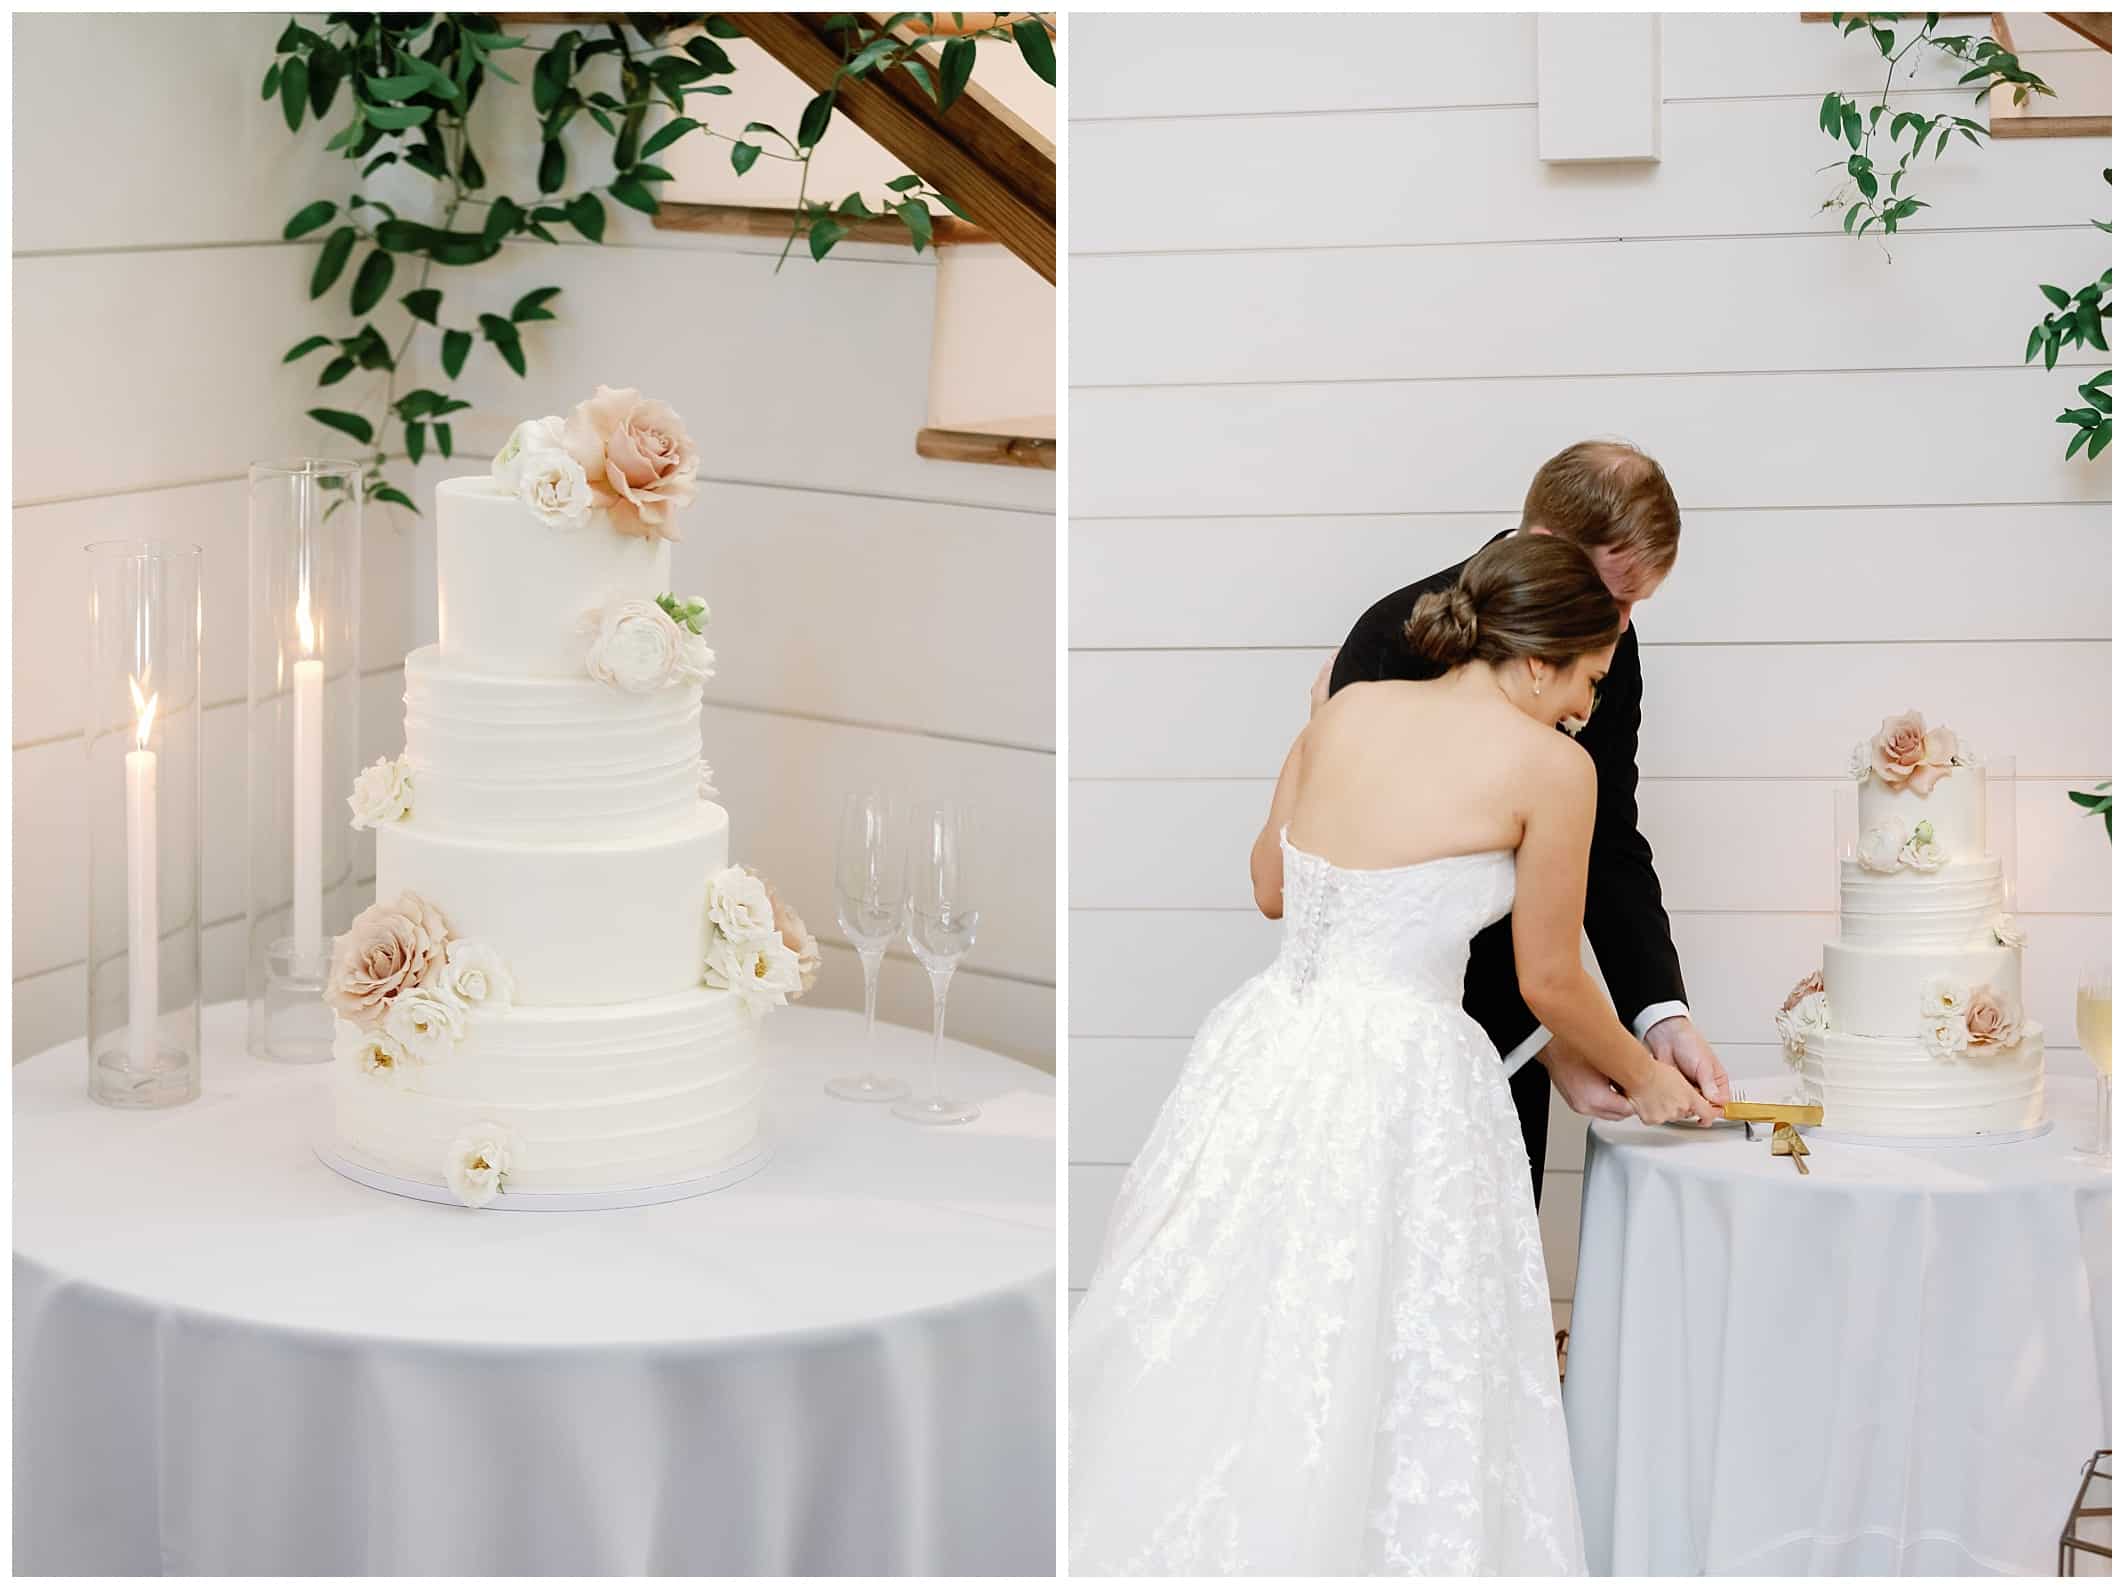 A bride and groom cutting a wedding cake.